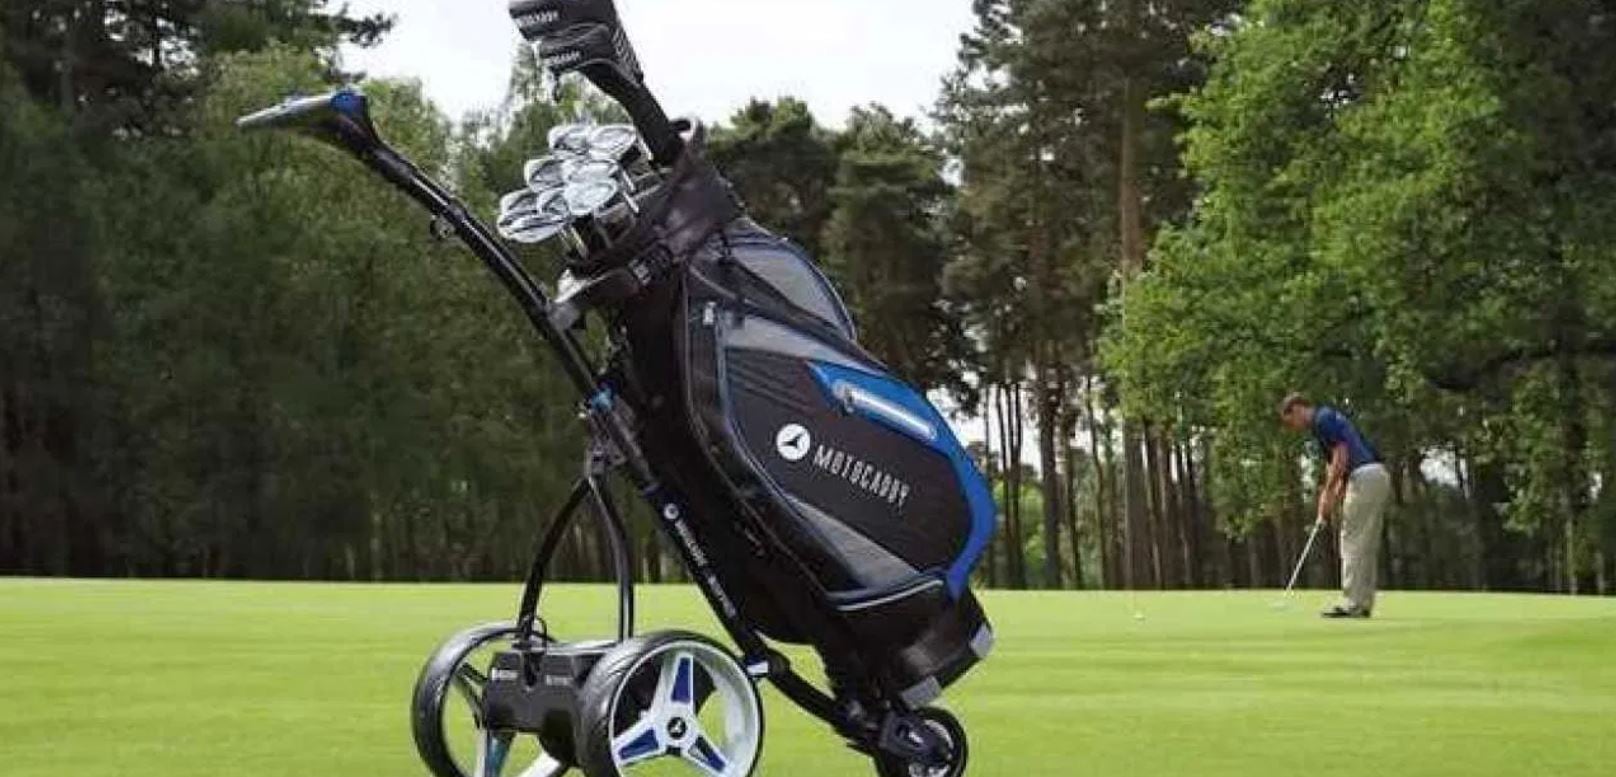 Best Golf Bag for Push Cart 